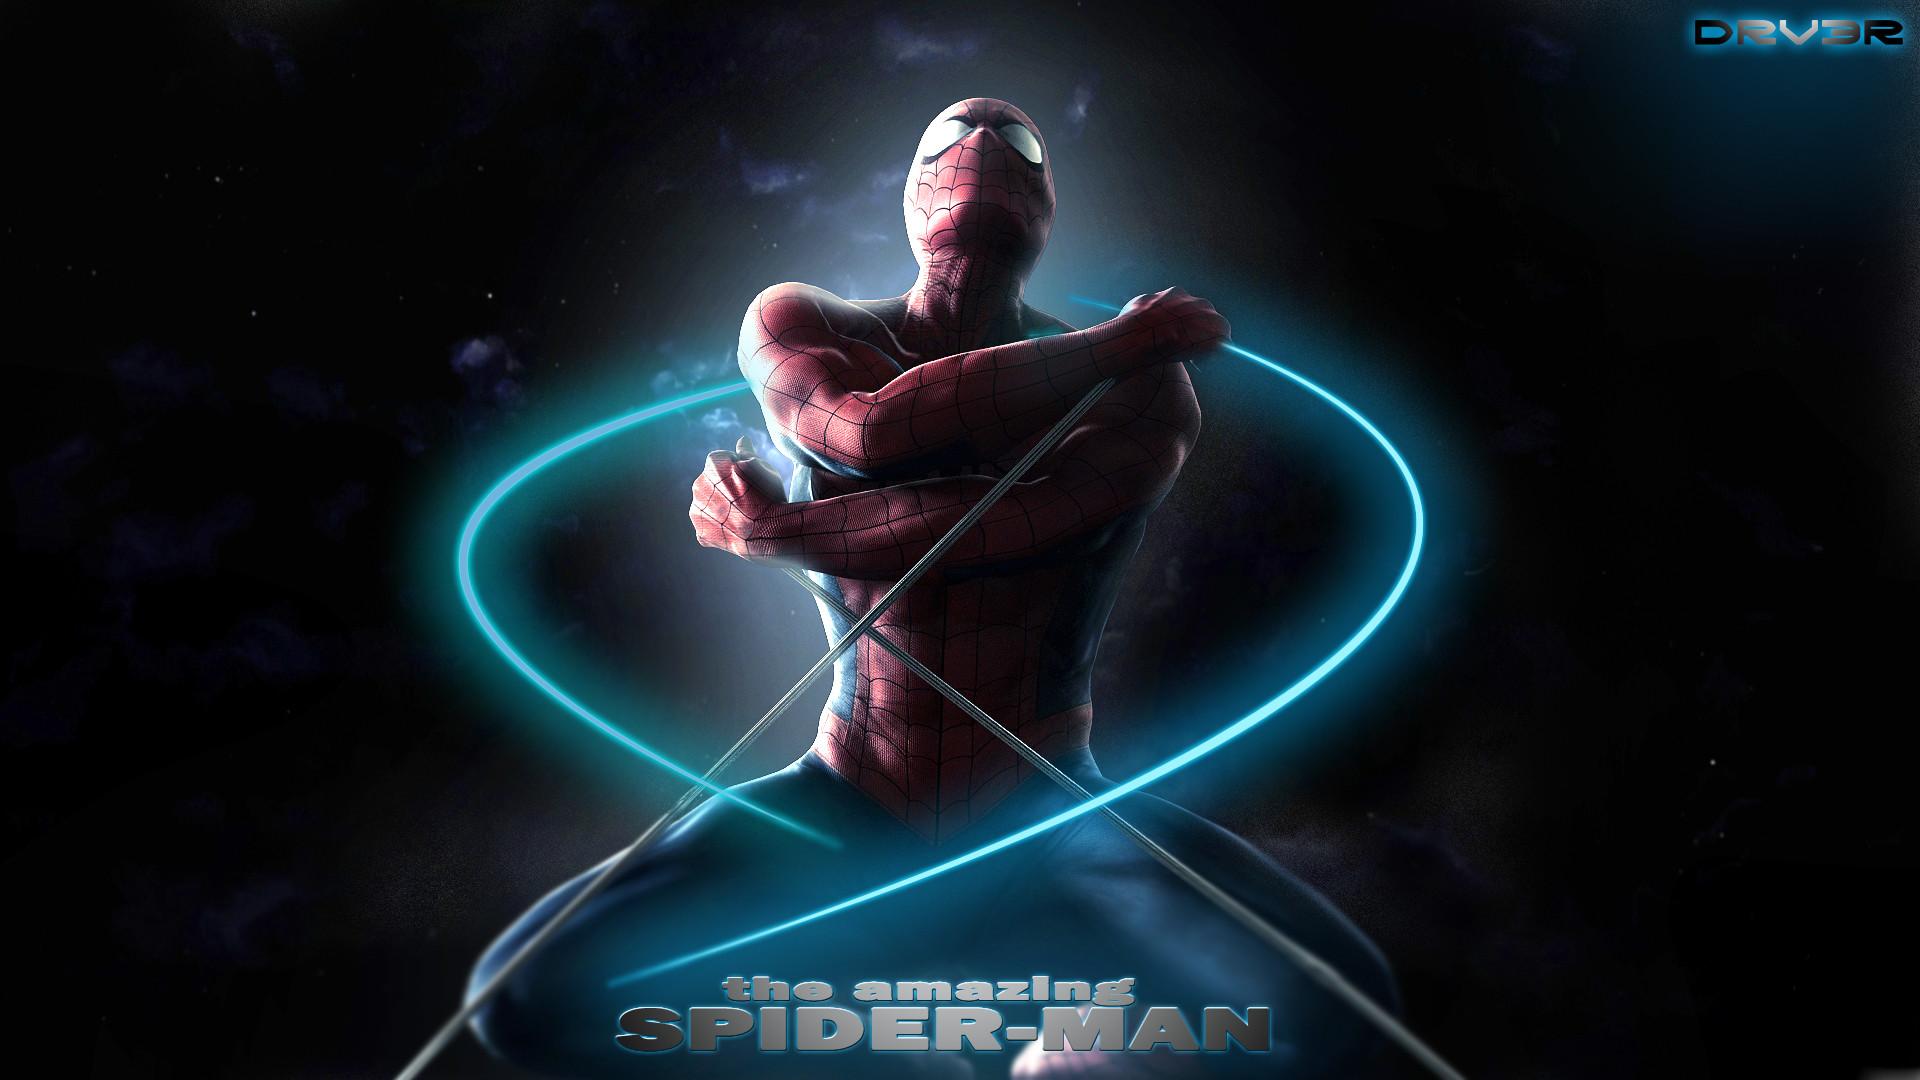 Spiderman 3 Wallpaper